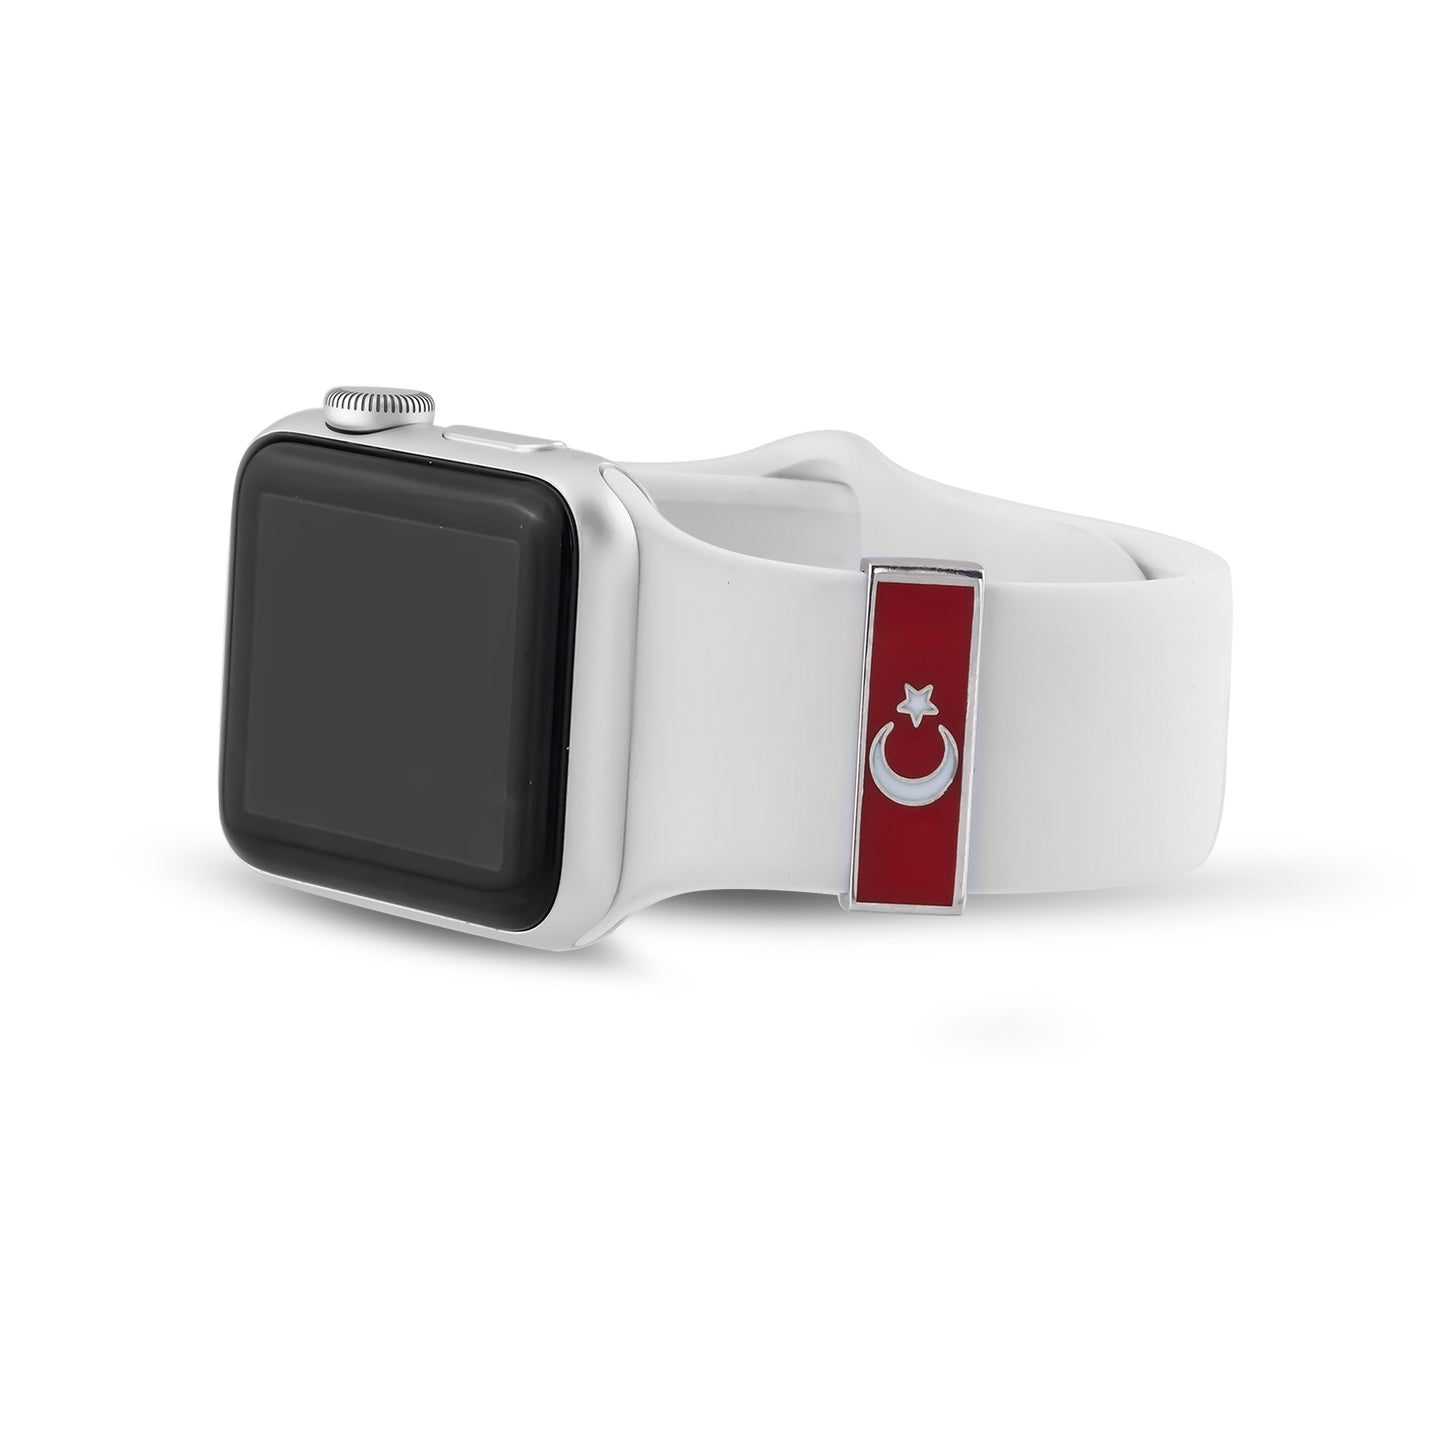 Apple Watch Schmuck Personalisiert.